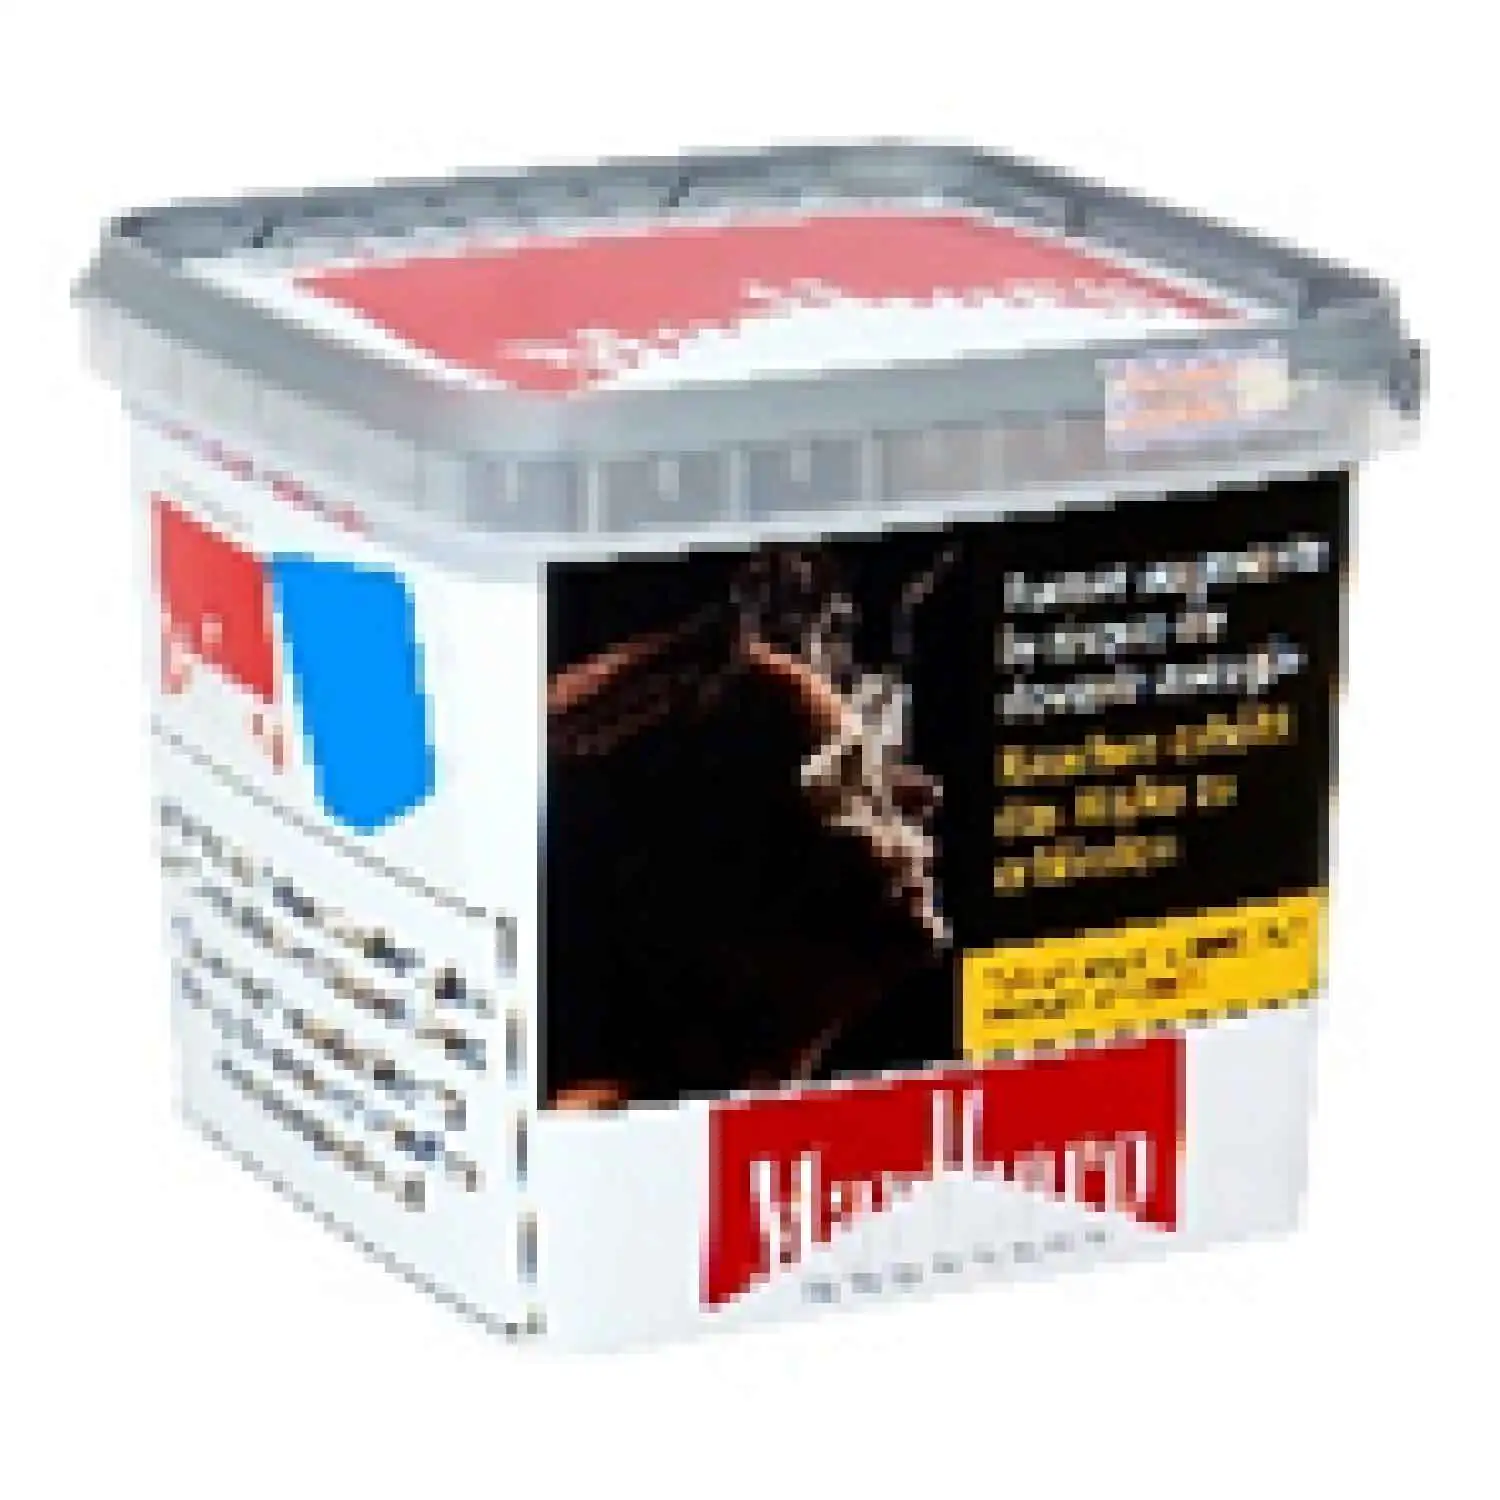 Marlboro volume 250g (L) - Buy at Real Tobacco